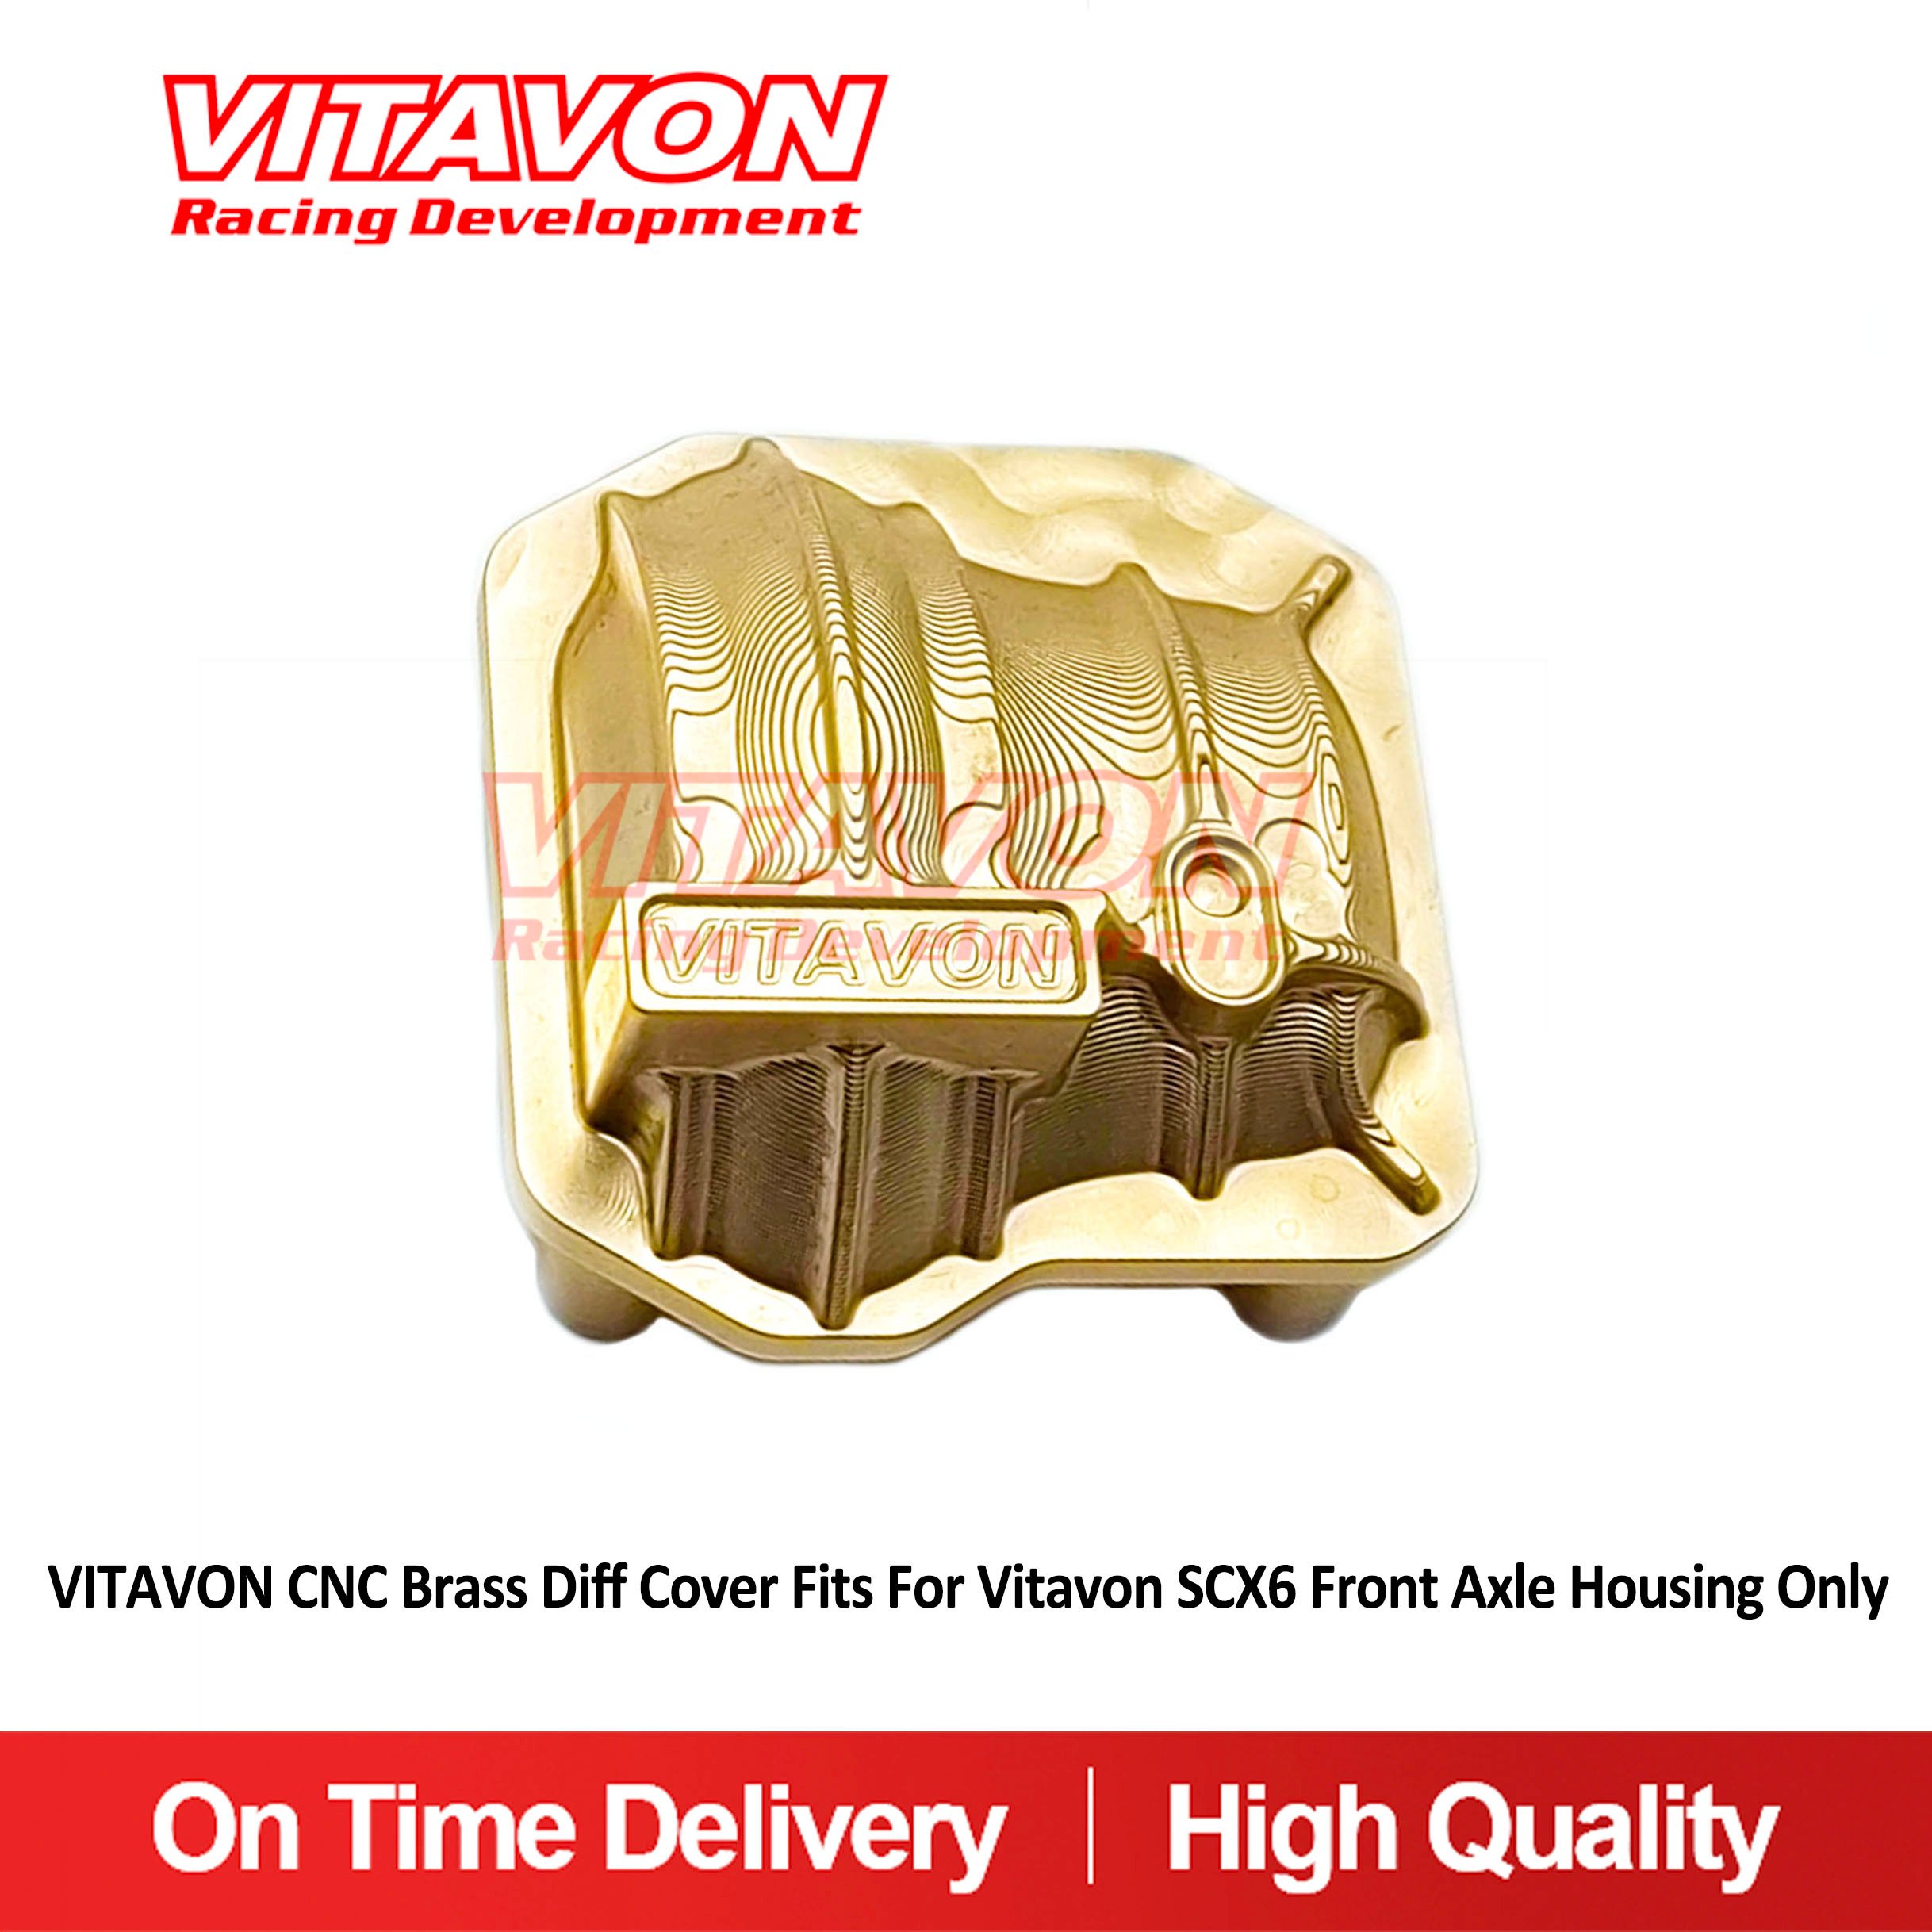 VITAVON CNC Brass Diff Cover fits for Vitavon SCX6 Front Axle housing only